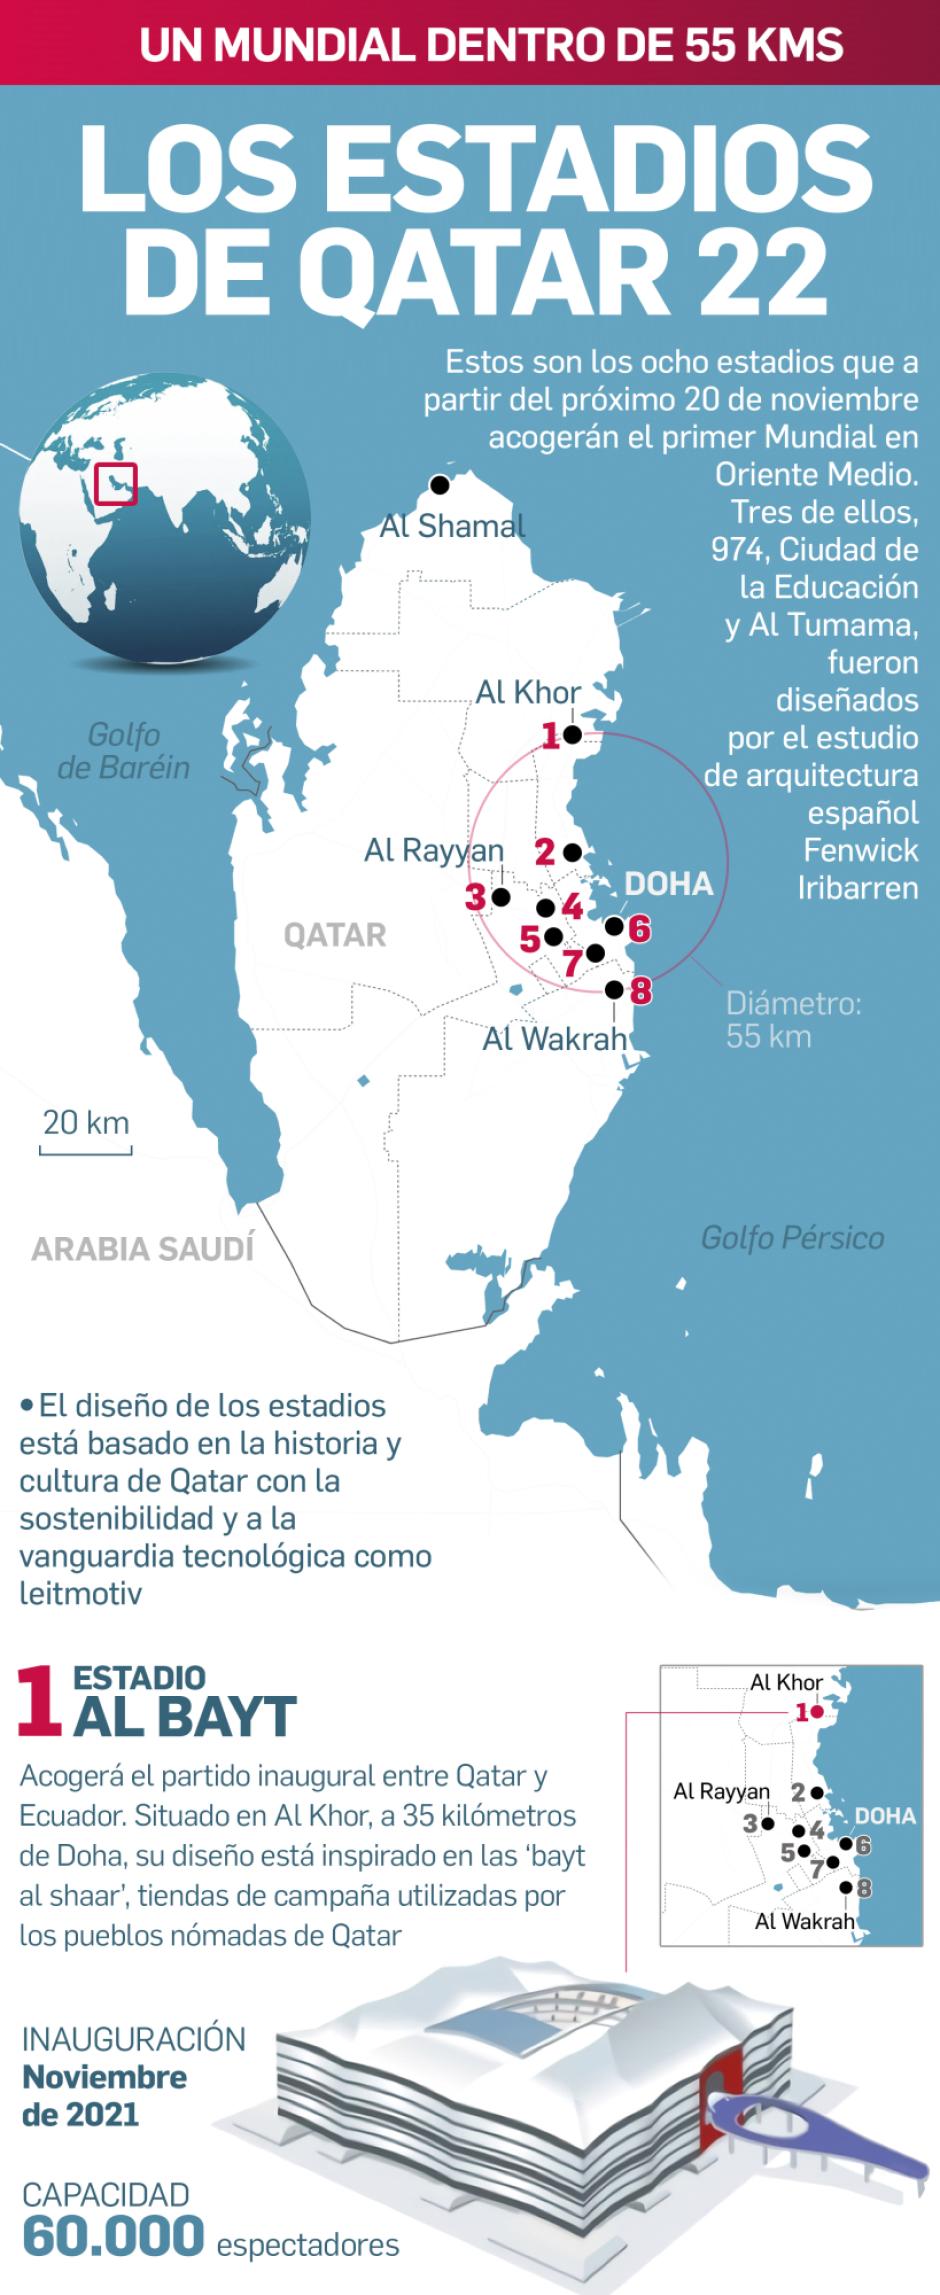 Qatar tendrá un total de 8 sedes